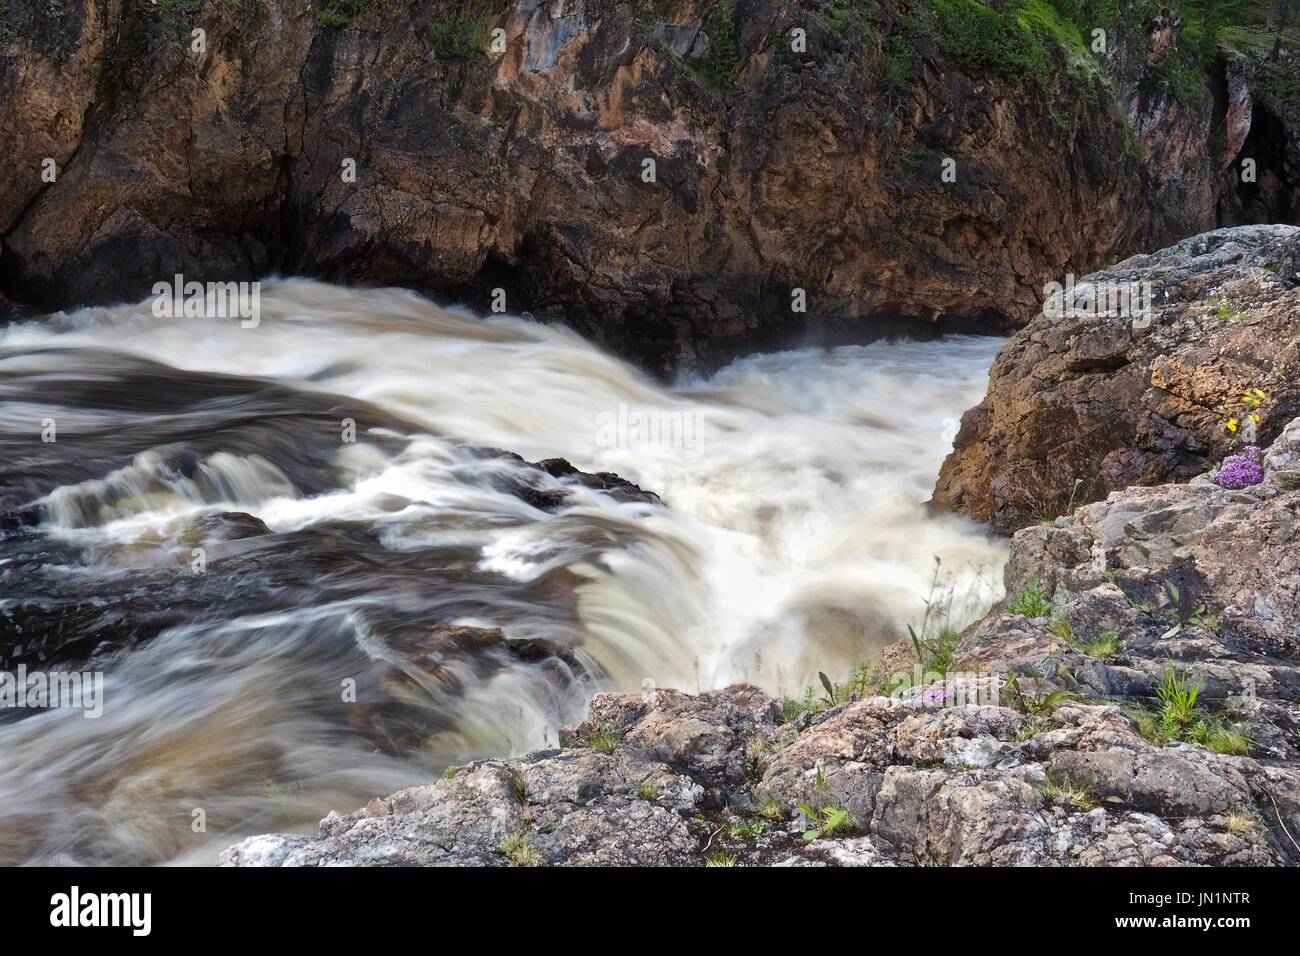 White waters in Kiutaköngäs, River Oulankajoki, Kuusamo, Finland Stock Photo